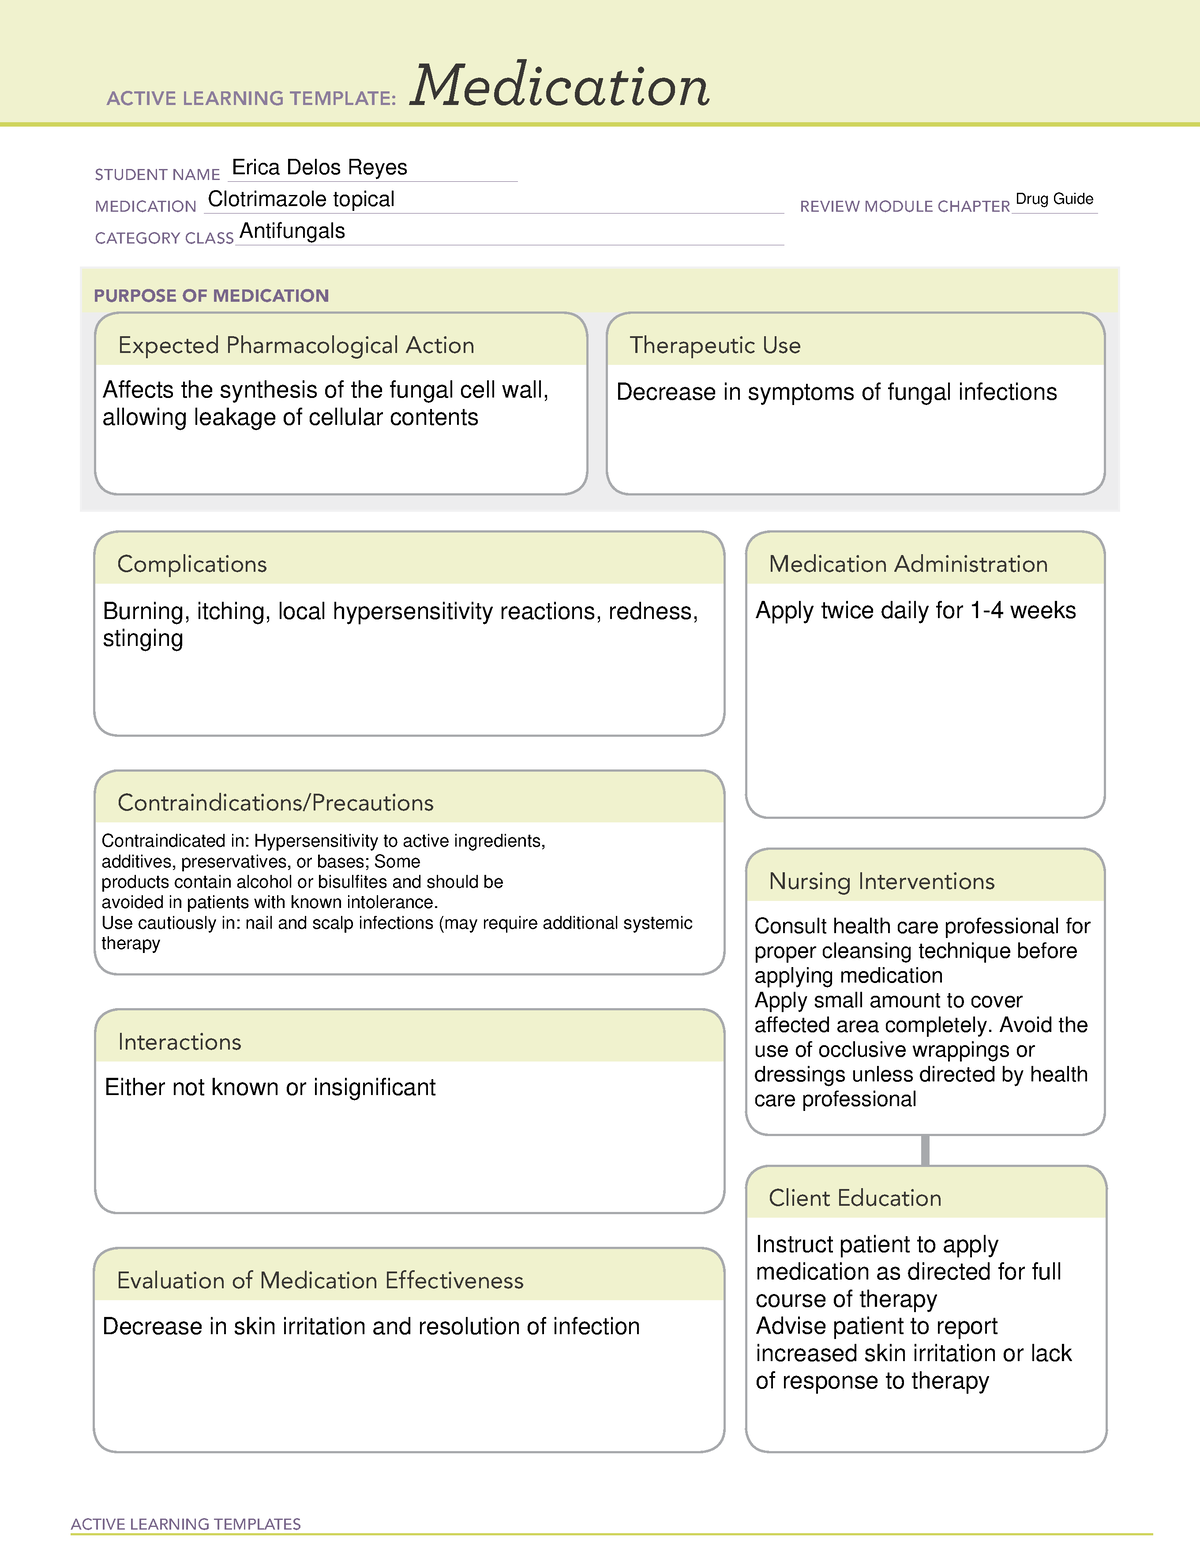 ati-medication-template-clotrimazole-active-learning-templates